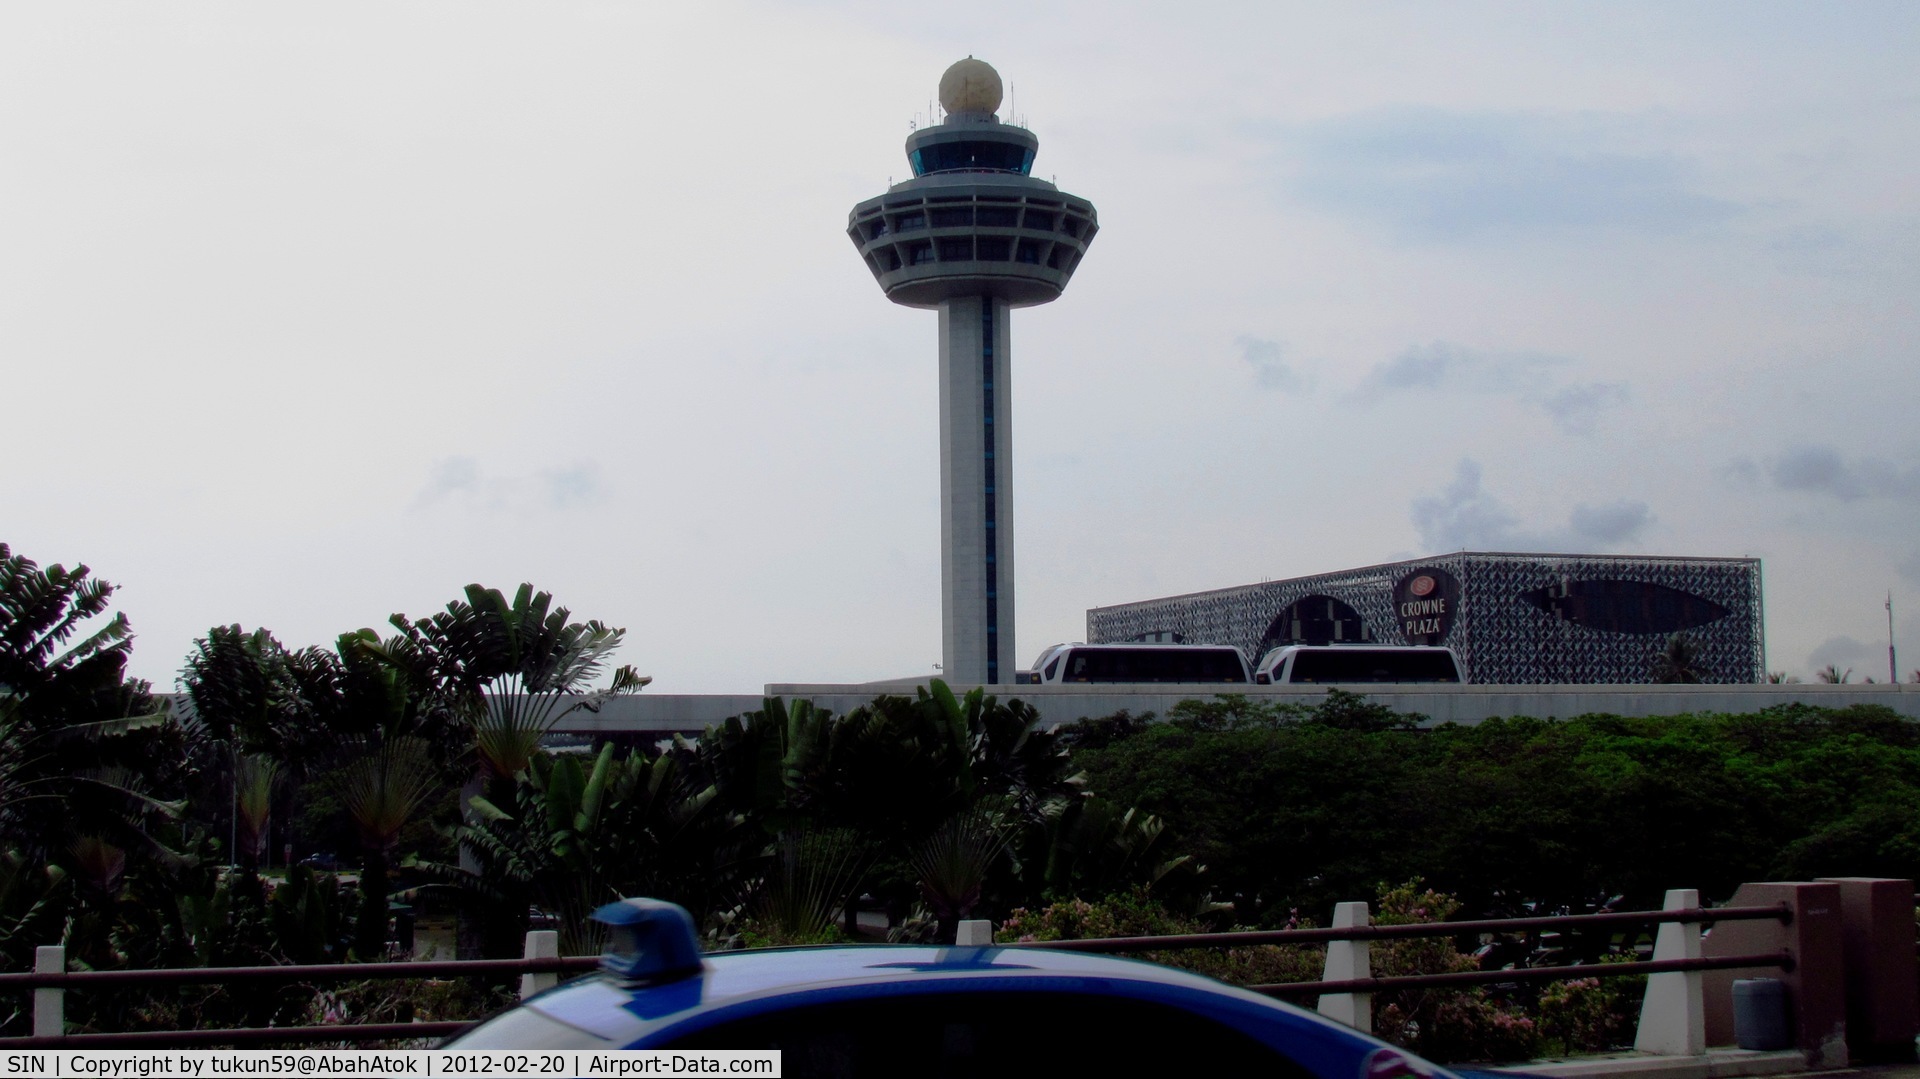 Singapore Changi Airport, Changi Singapore (SIN) - Singapore Changi Airport